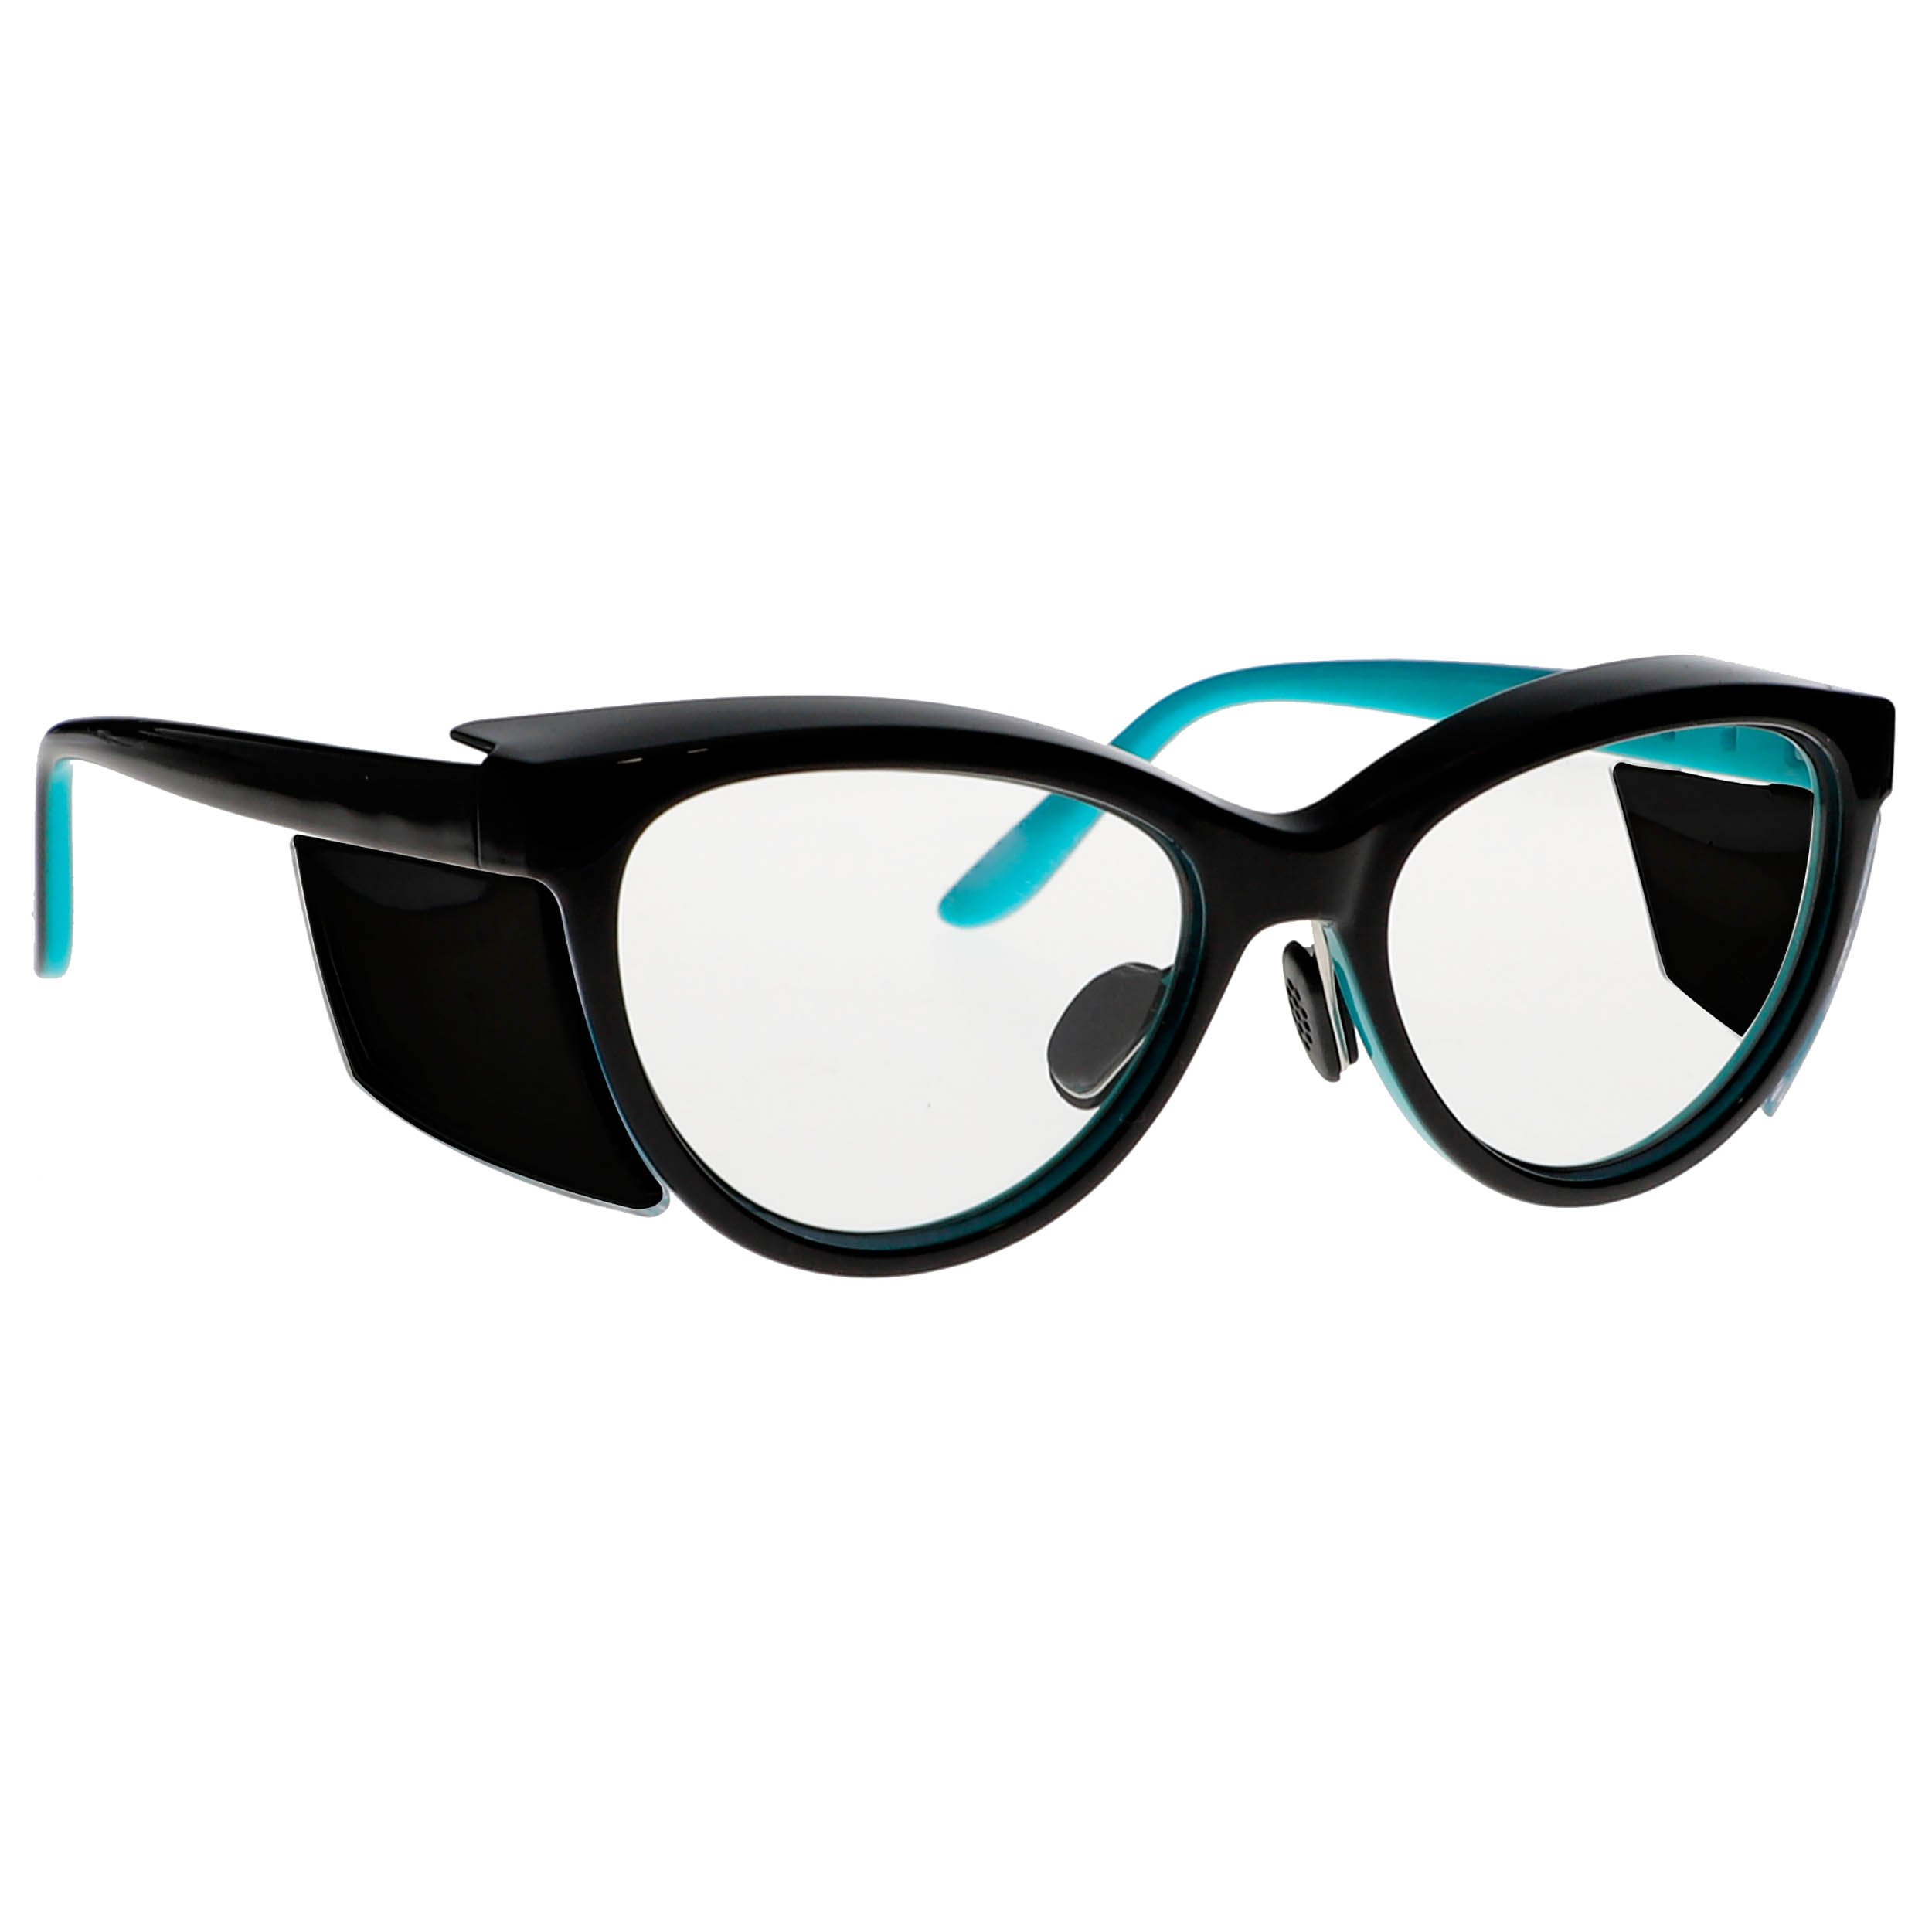 https://www.universalmedicalinc.com/media/catalog/product/cache/a56de52350e85504a445e30772b0ac5c/r/g/rg-t9730_radiation-safety-glasses-model-t9730-black-teal-angled-right.jpg